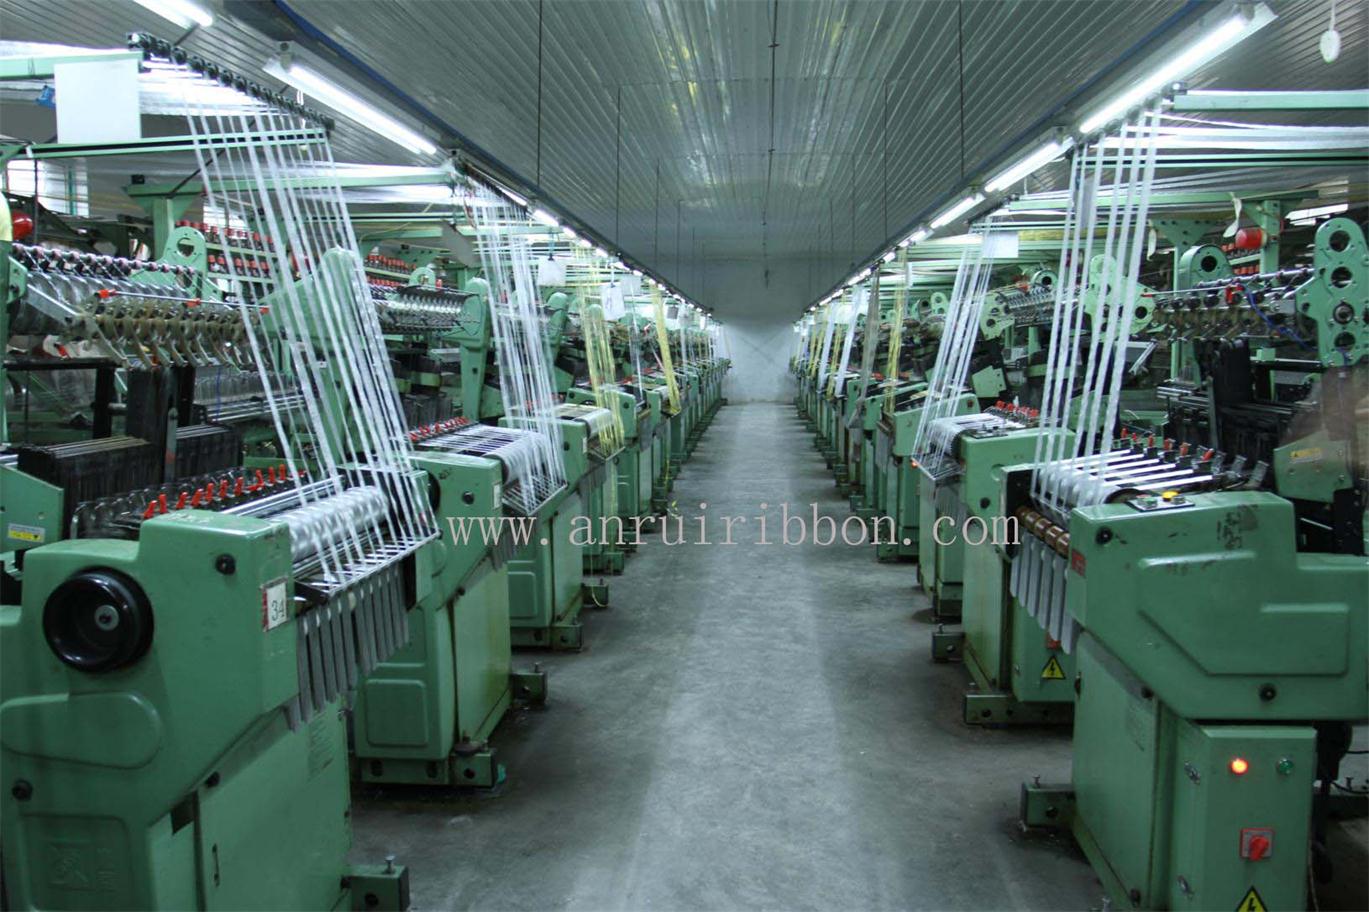 Changle Anrui Ribbon Factory Main Image